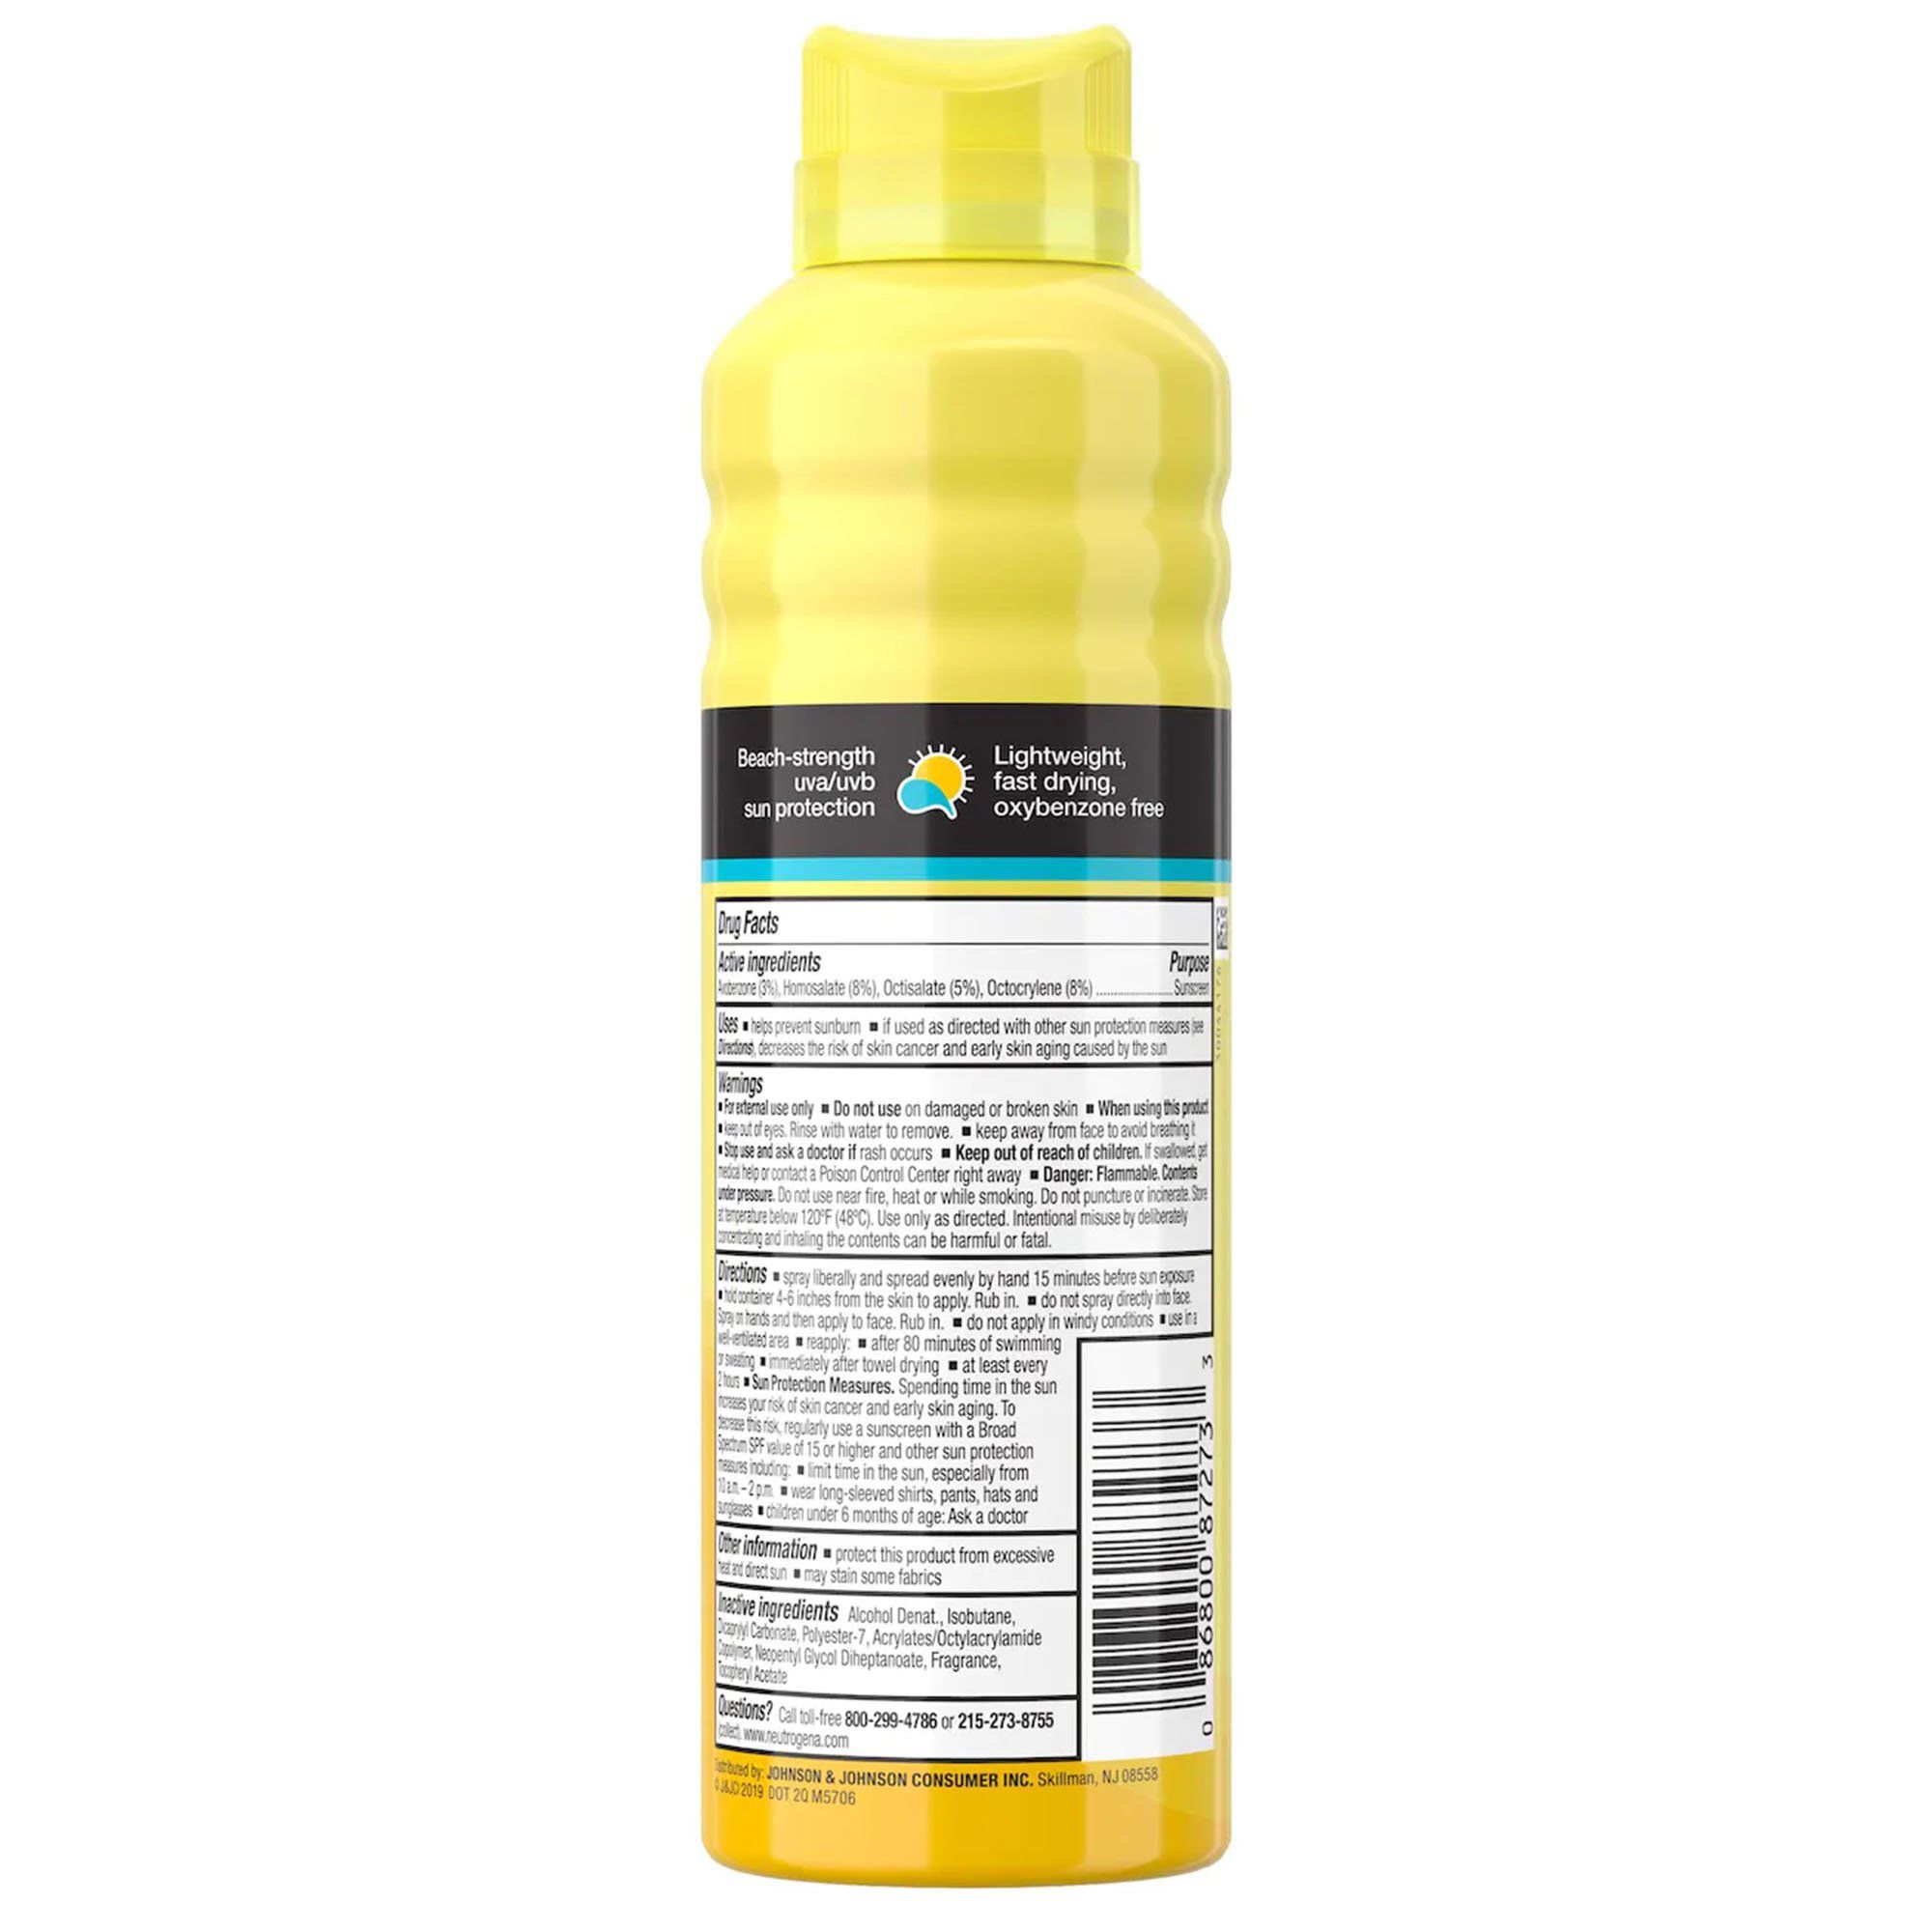 DISCNeutrogena Beach Defense Sunscreen Spray, SPF 30 - 6.5 oz